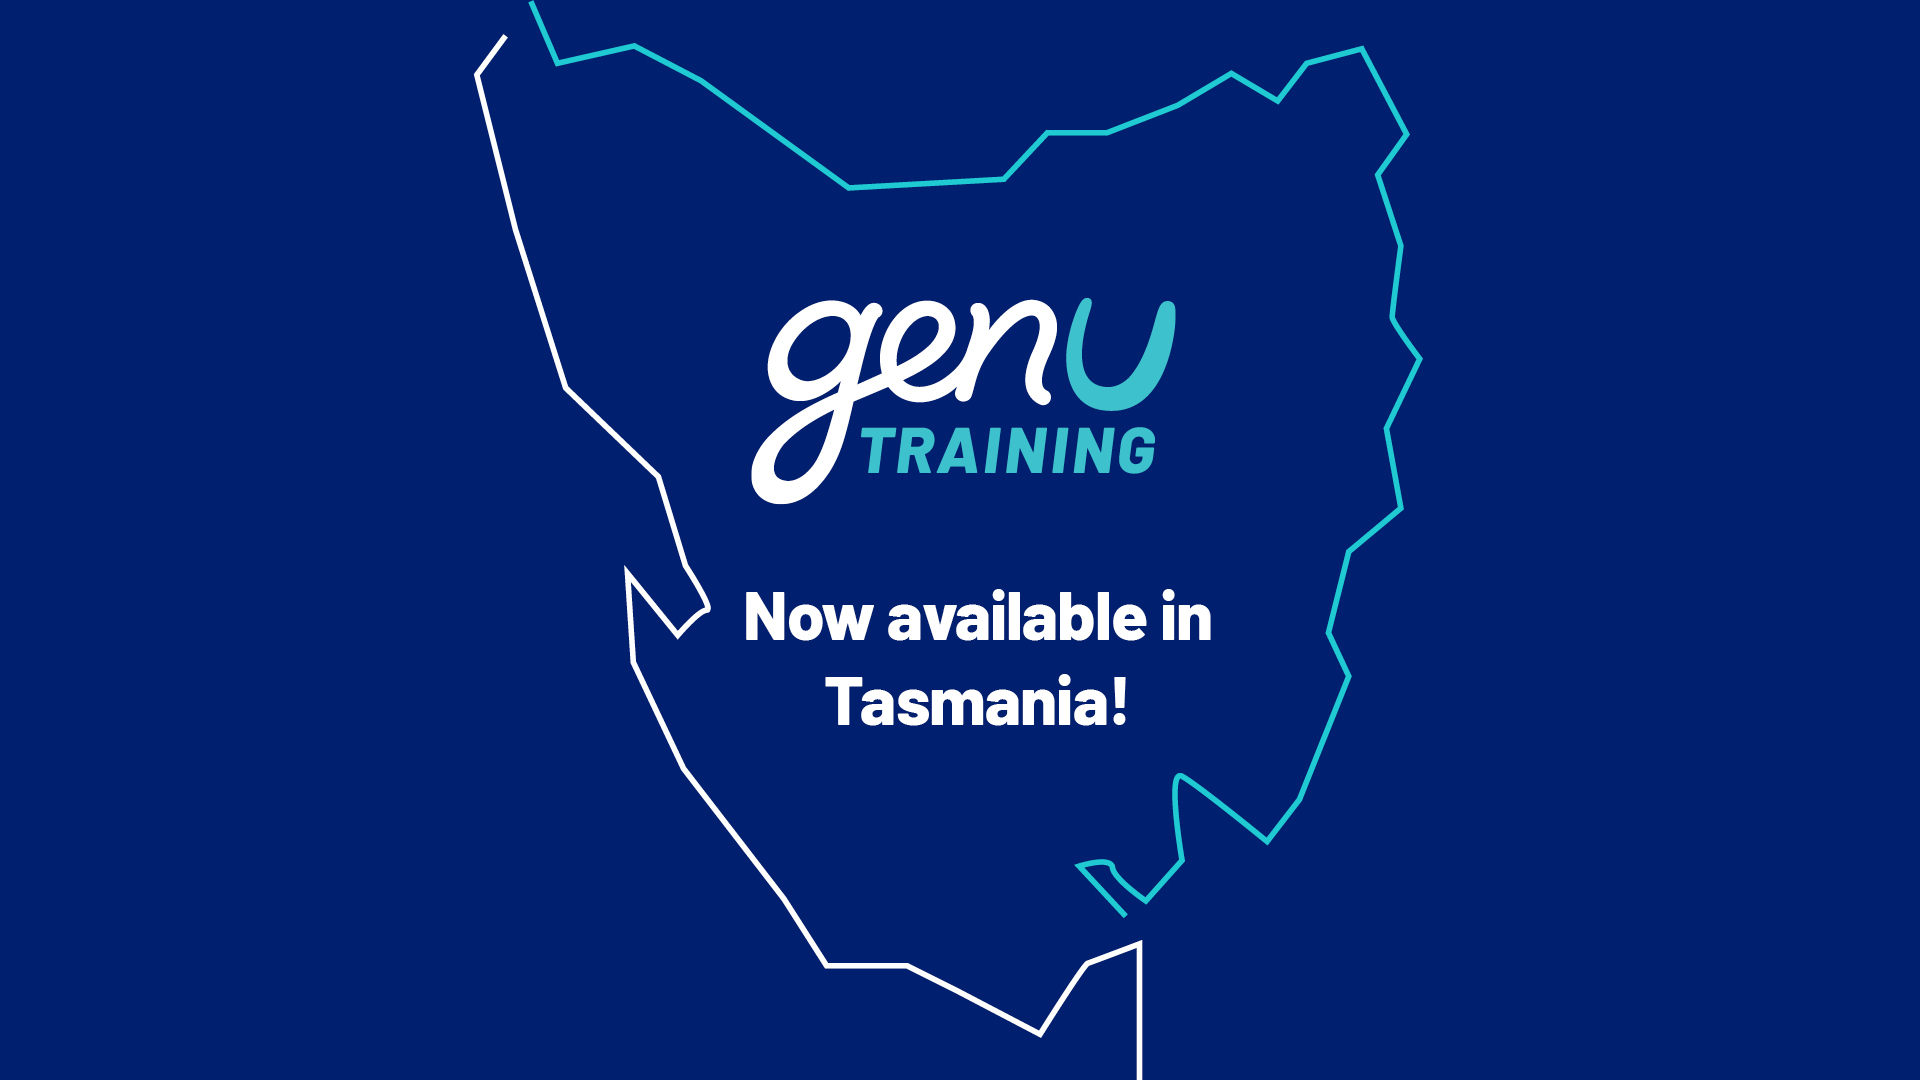 genU Training now in Tasmania